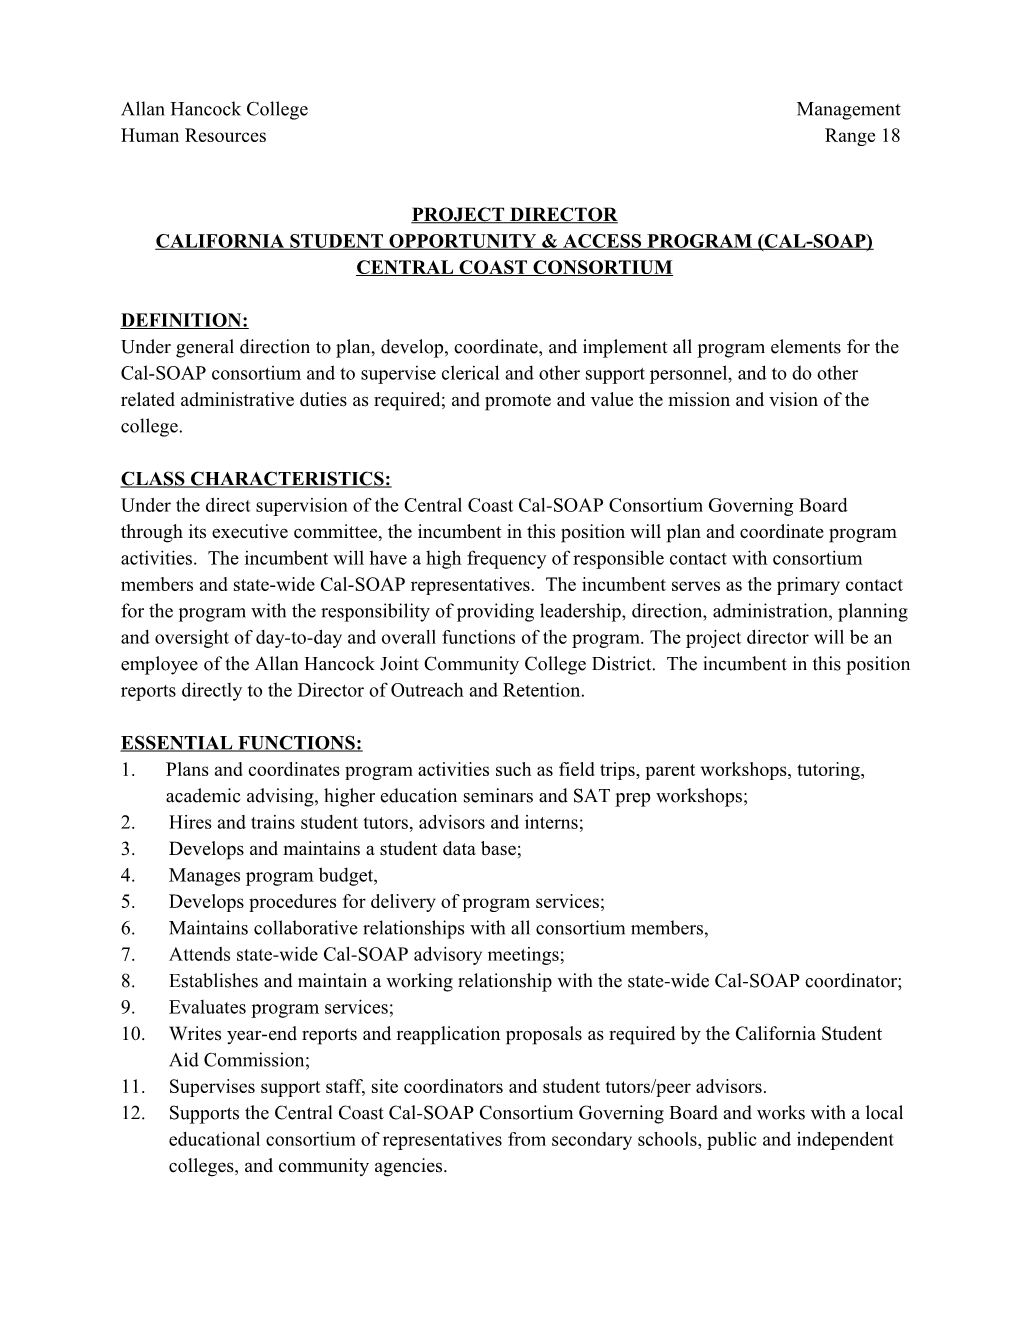 California Student Opportunity & Access Program (Cal-Soap)